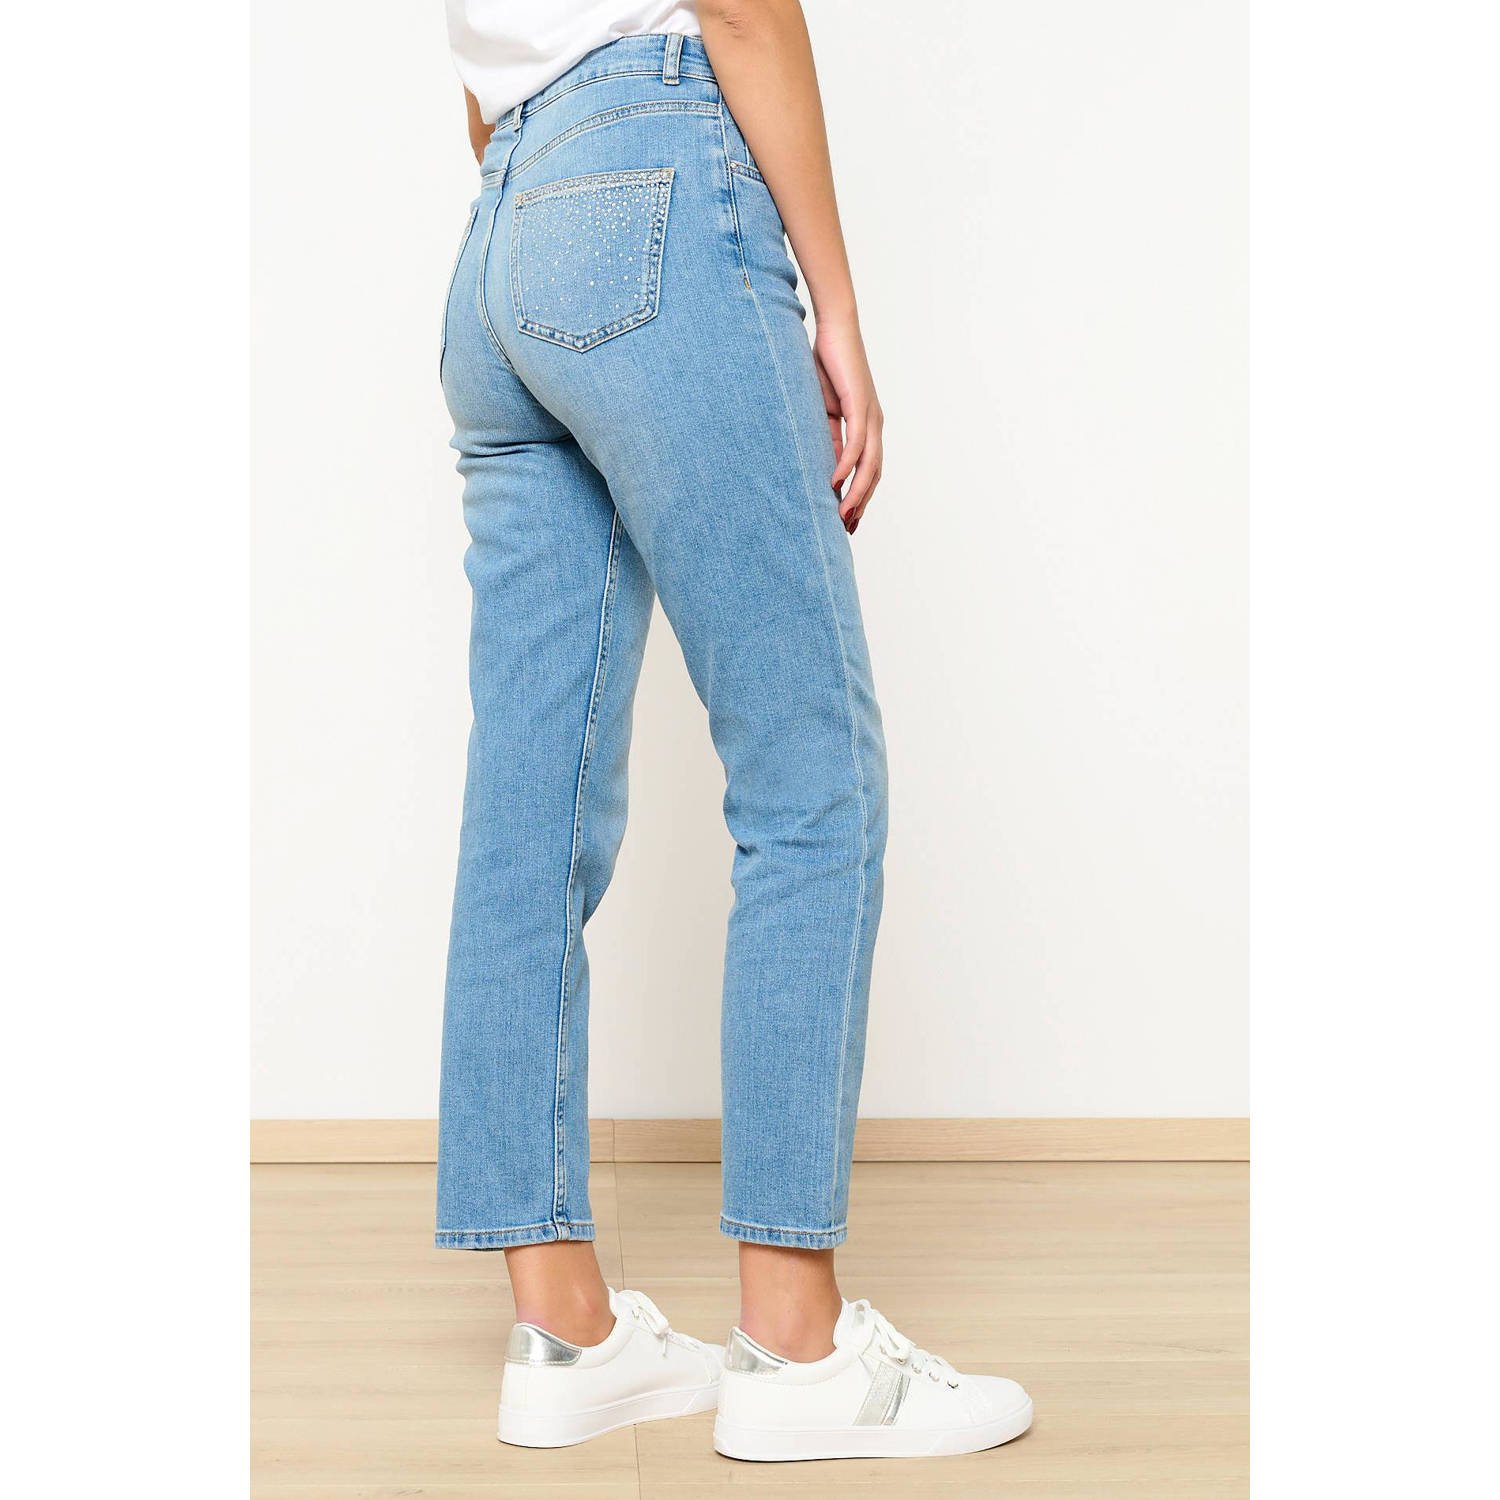 LOLALIZA high waist slim fit jeans light blue denim